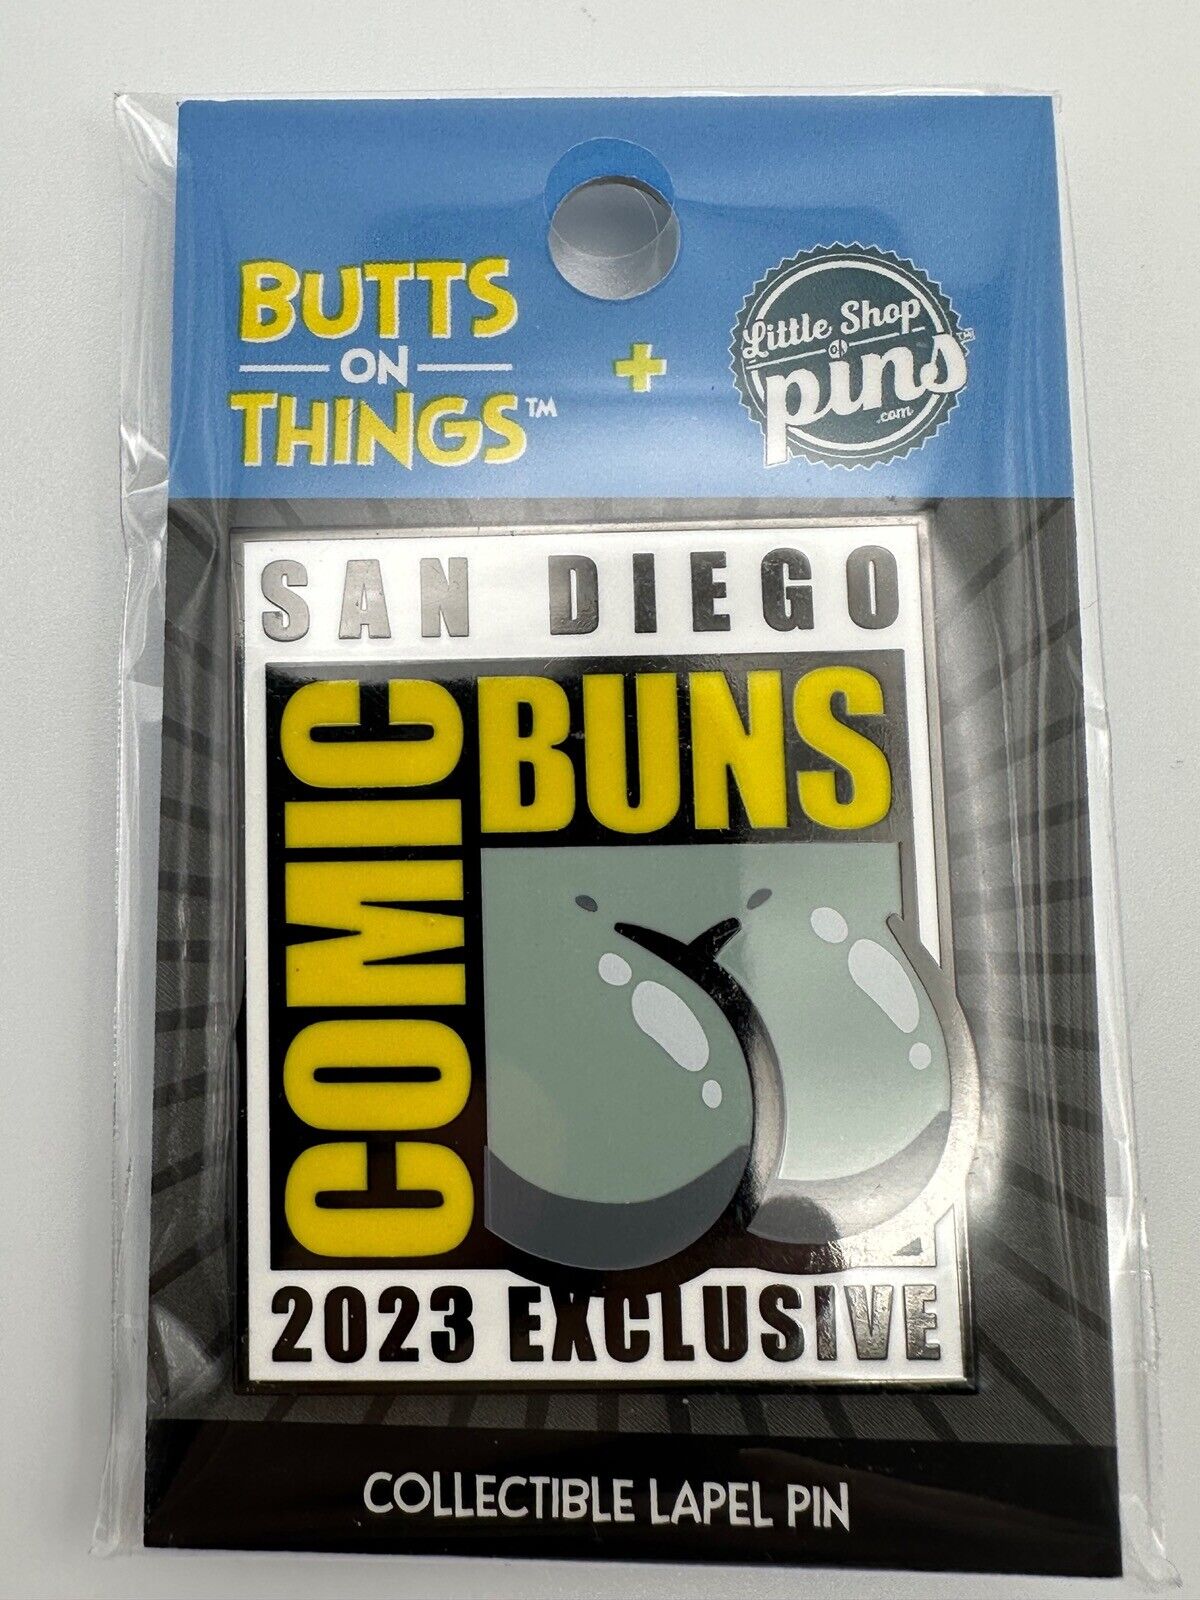 SDCC 2023 EXCLUSIVE Butts on Things “Eye” Logo Enamel Pin